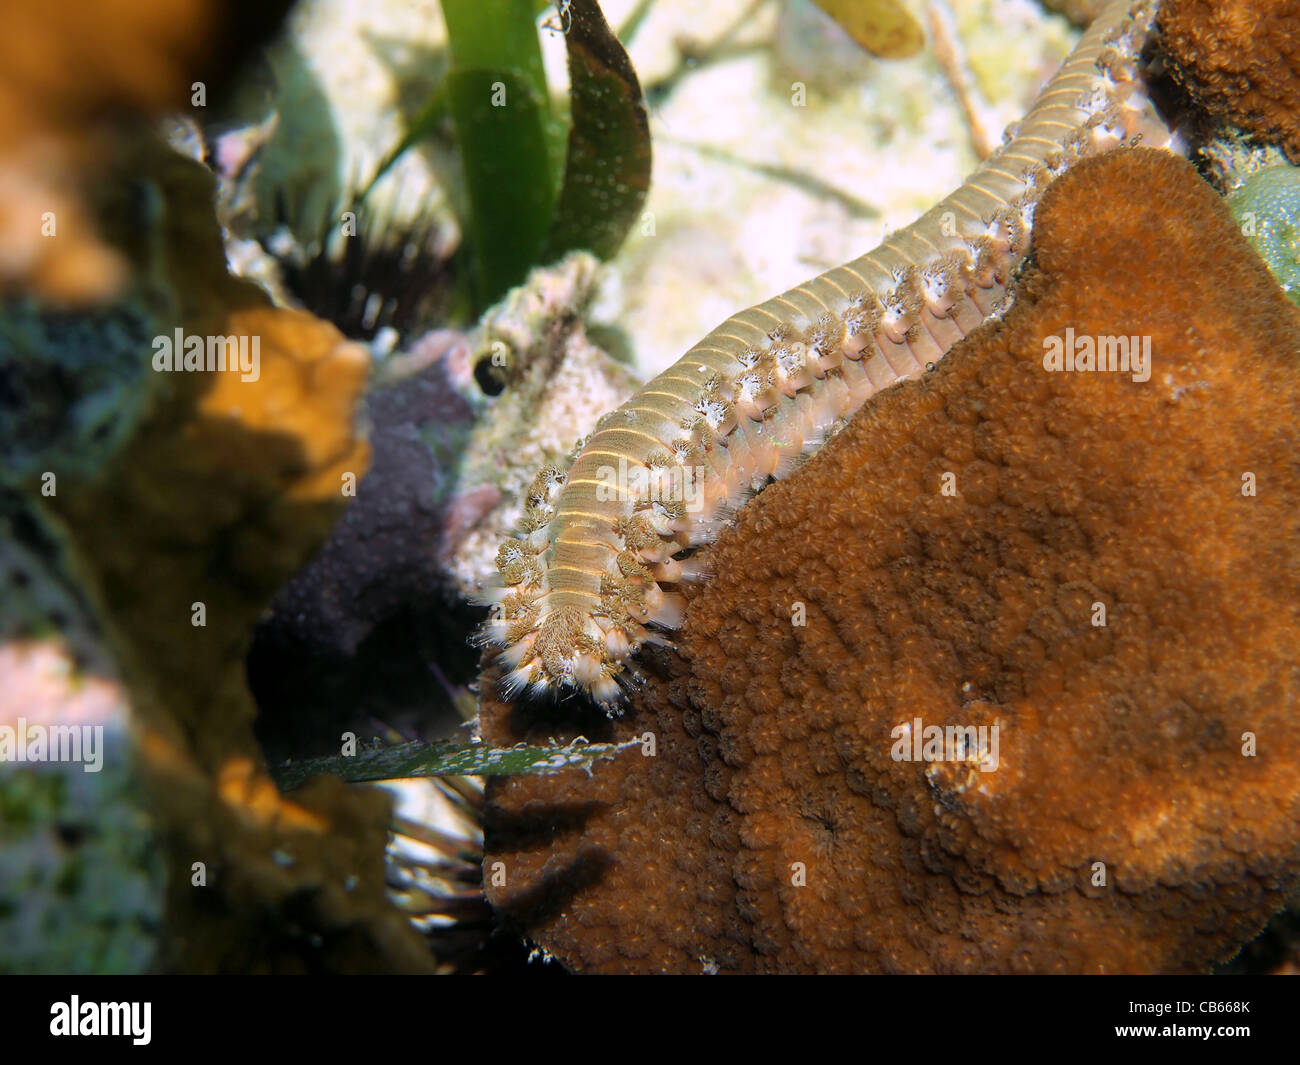 Bearded fireworm, Hermodice carunculata, in a coral reef, Caribbean, Costa Rica Stock Photo